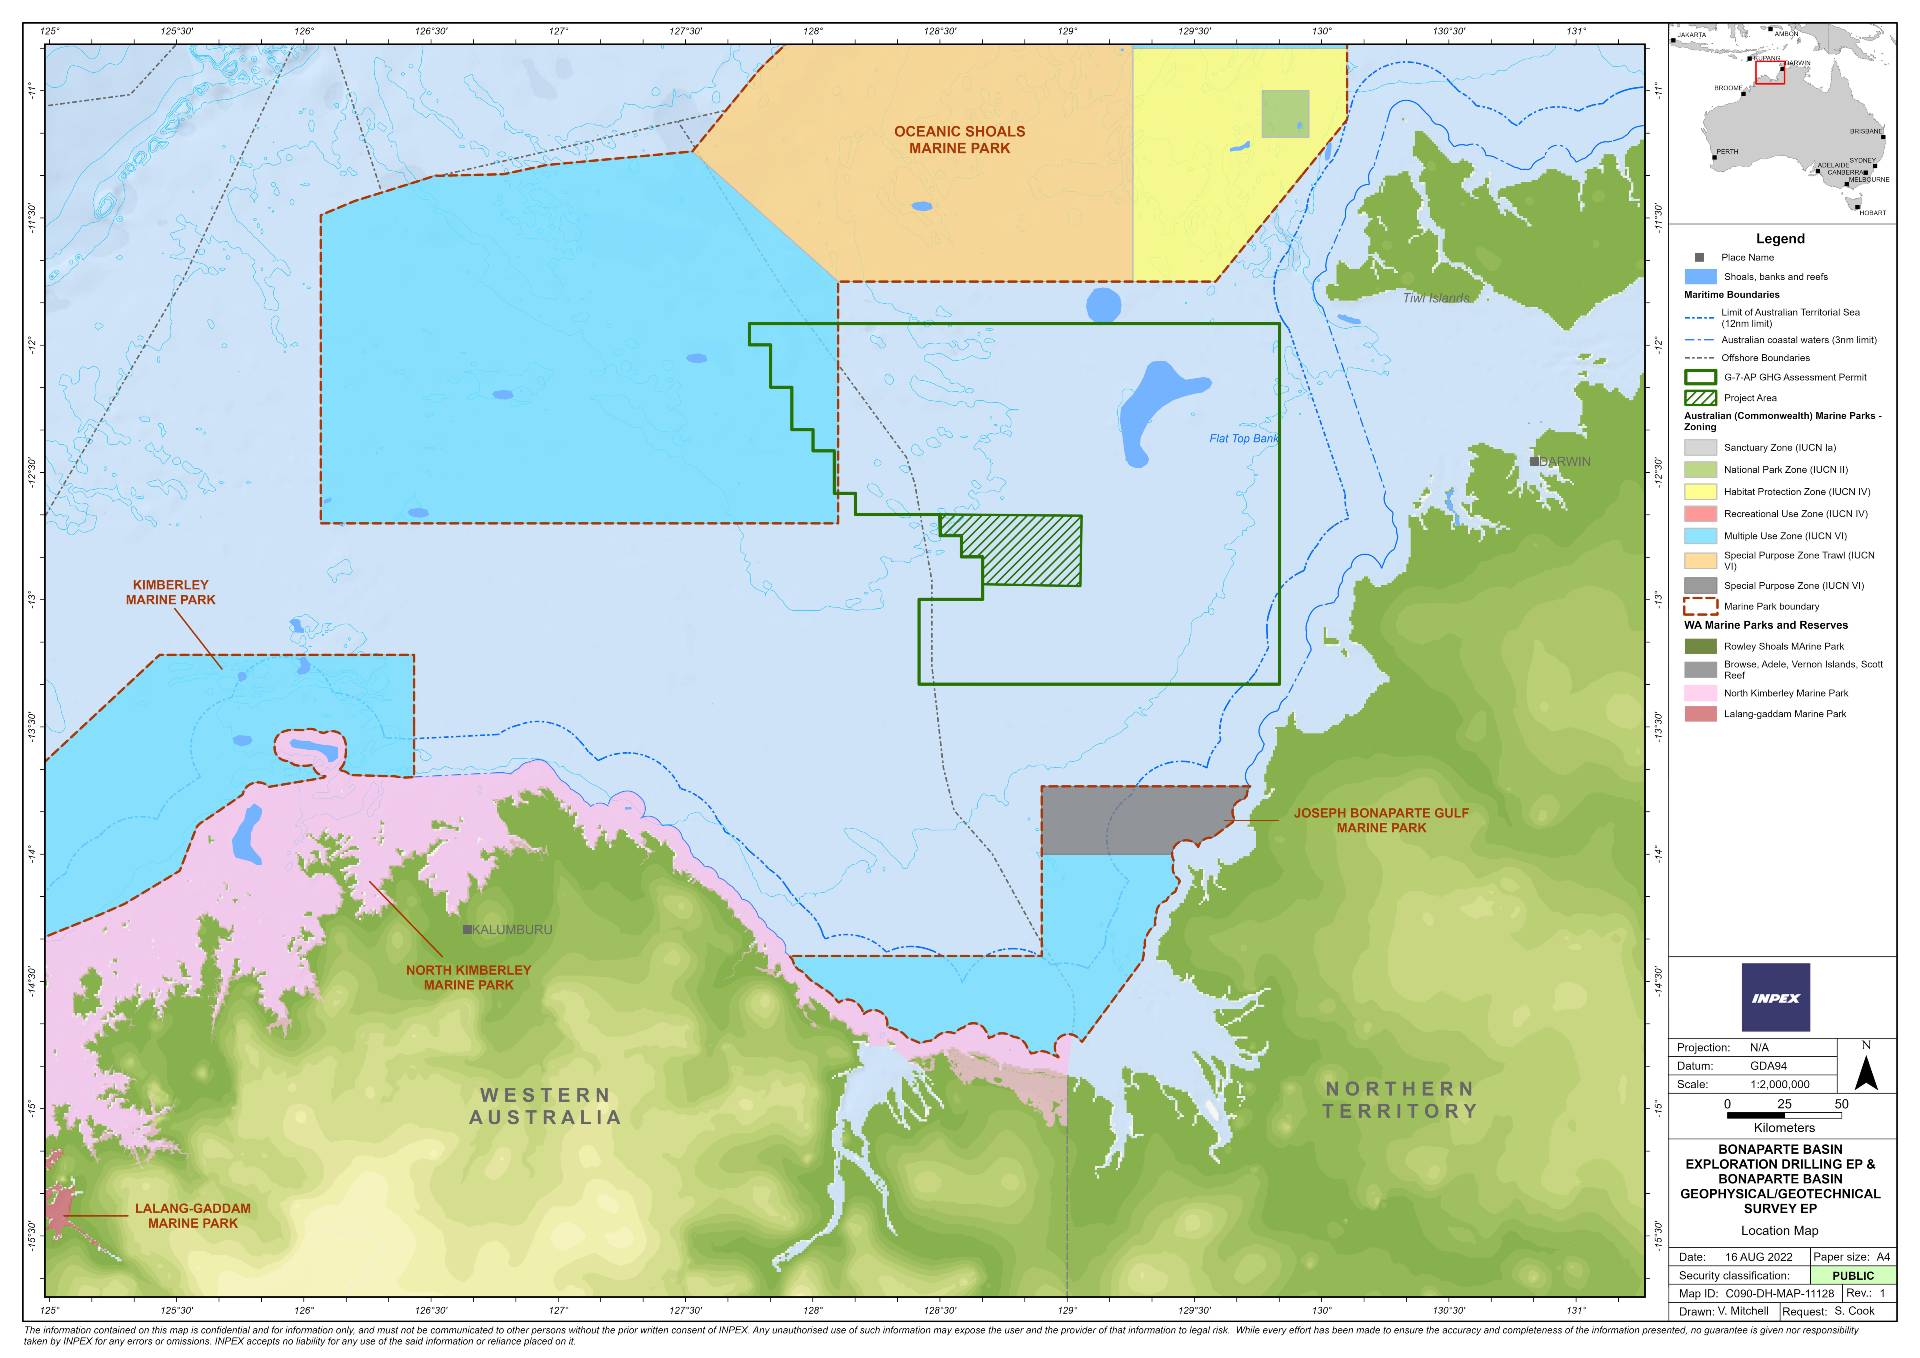 Location map - Activity: Bonaparte Basin Exploration Drilling (refer to description)